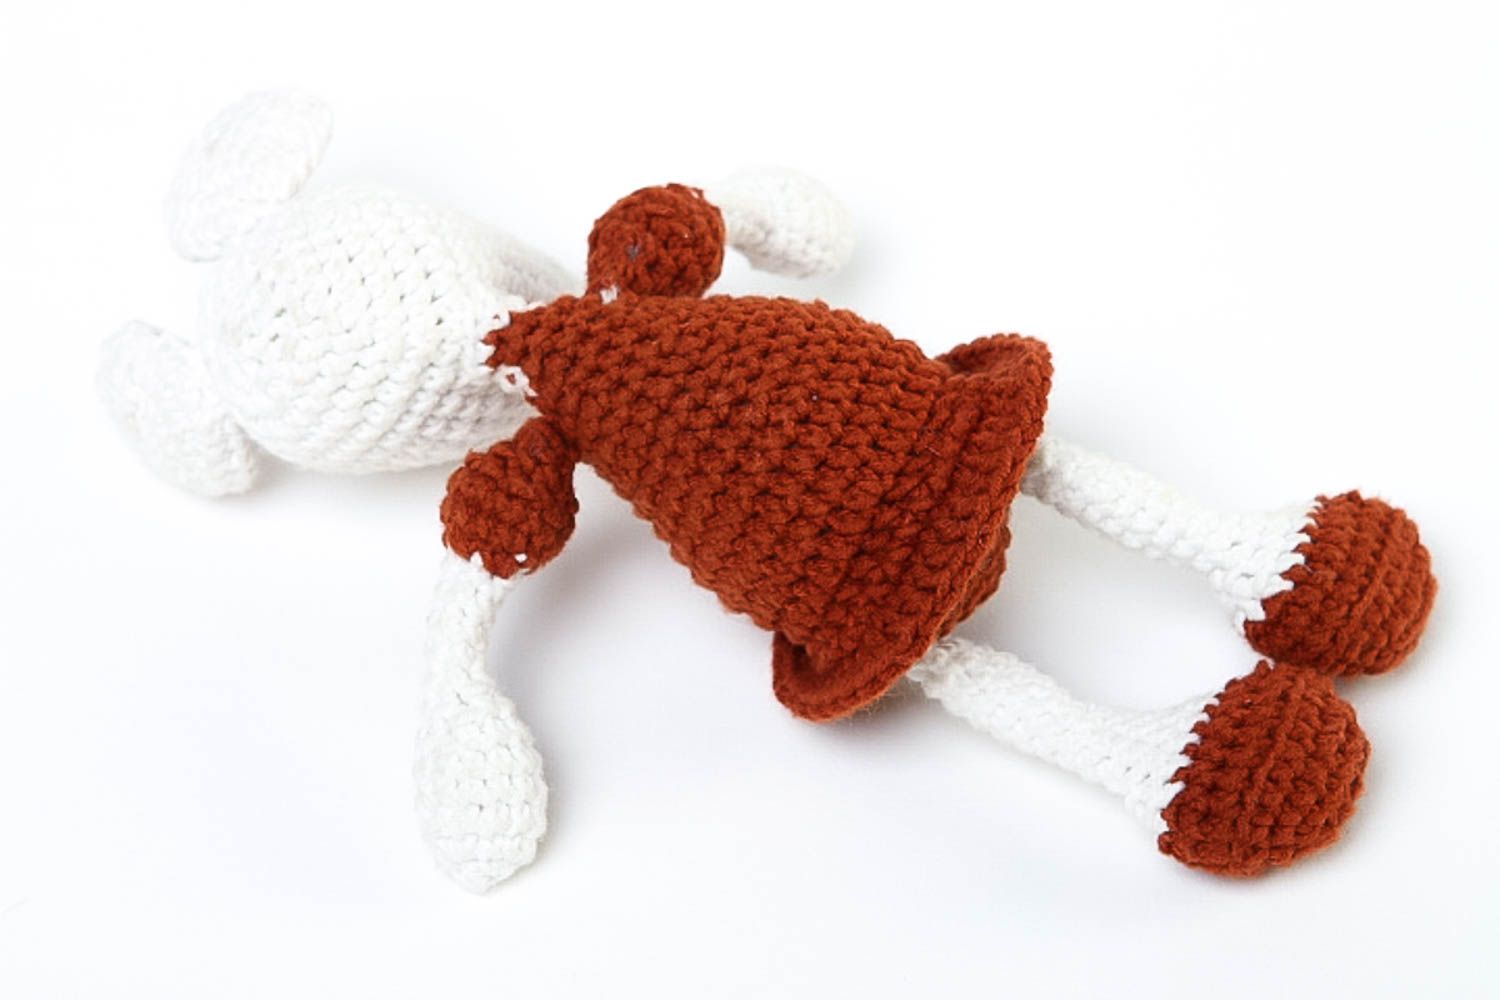 Handmade crocheted doll for children crocheted mouse toy nursery decor ideas photo 4